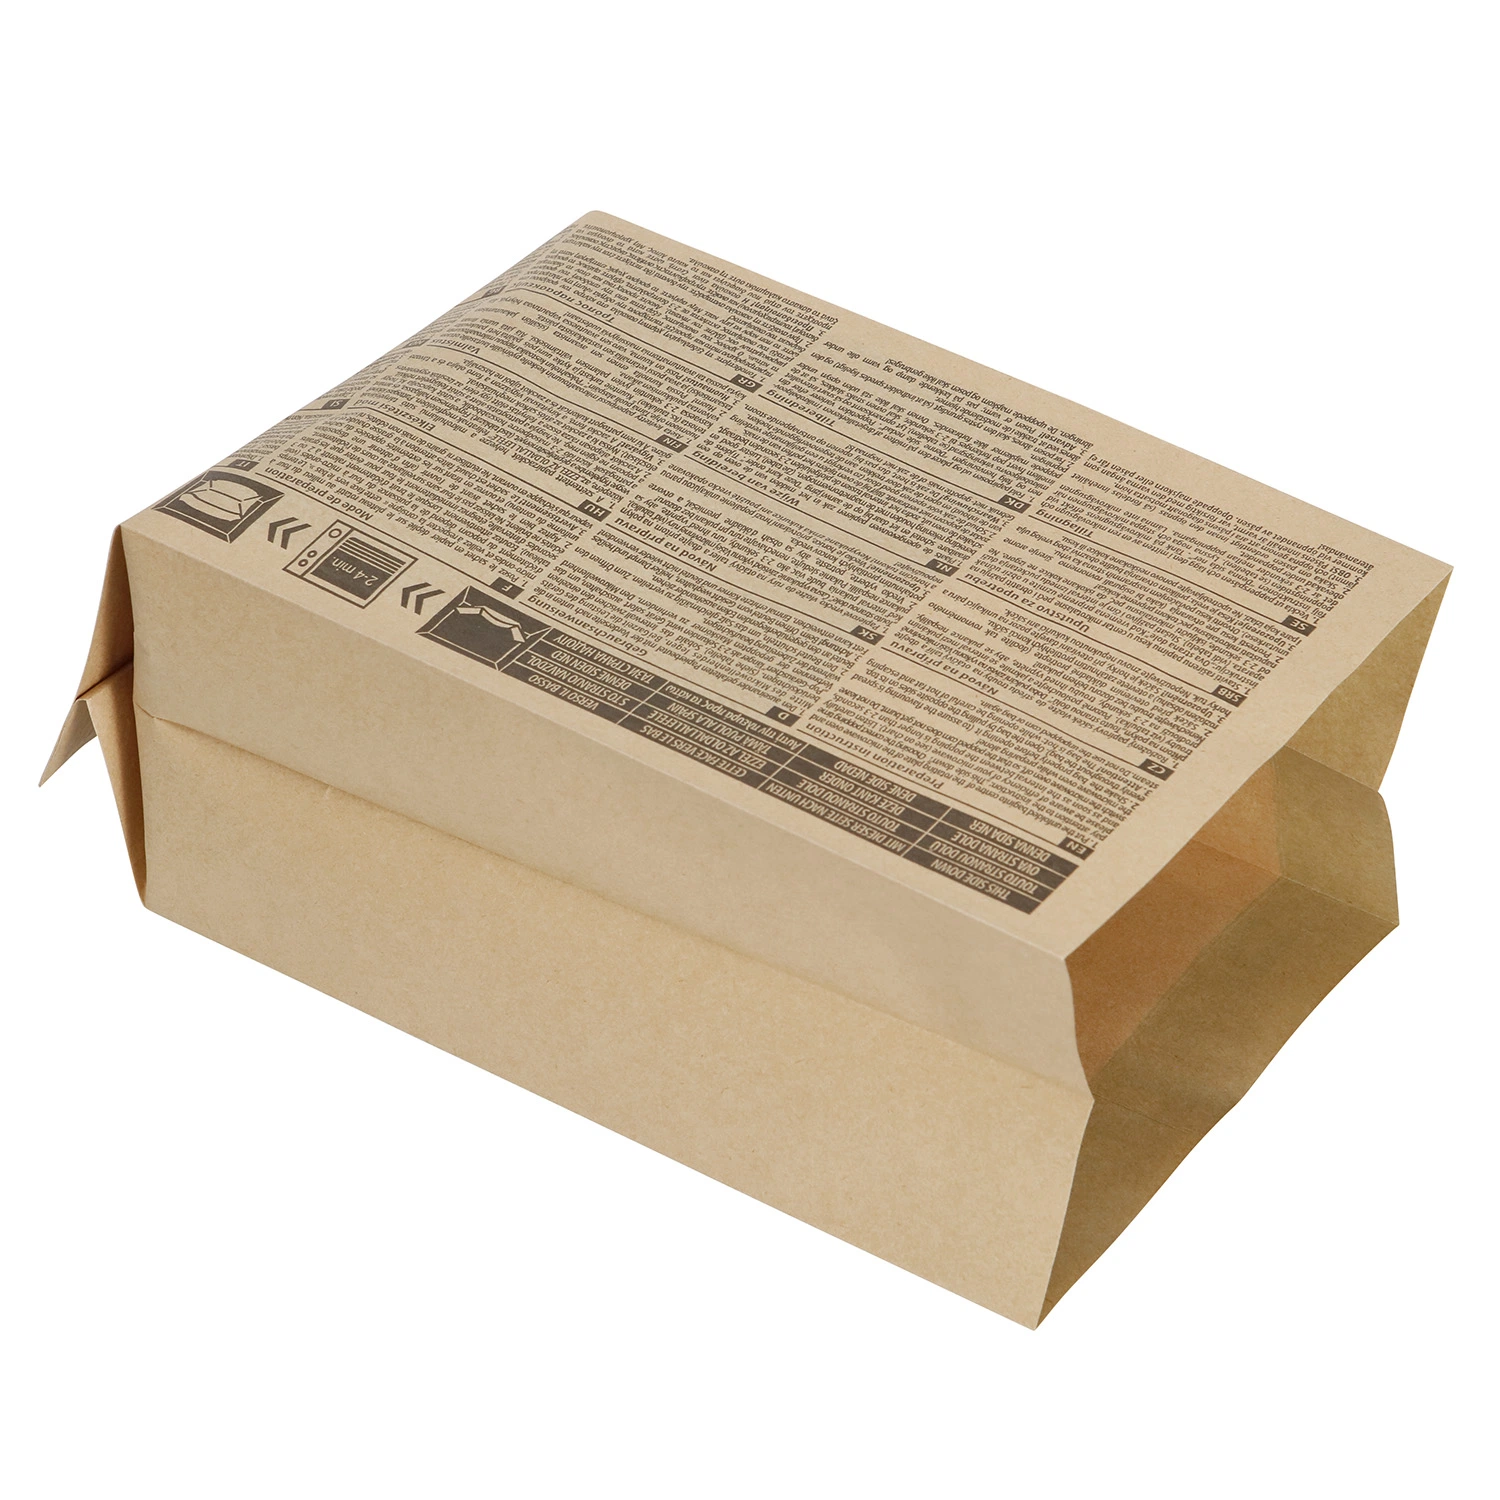 Wholesale/Supplier Folding Security Seal Custom Food Gradepaper with Reflective Film Biodegradable Microwave Popcorn Paper Bag